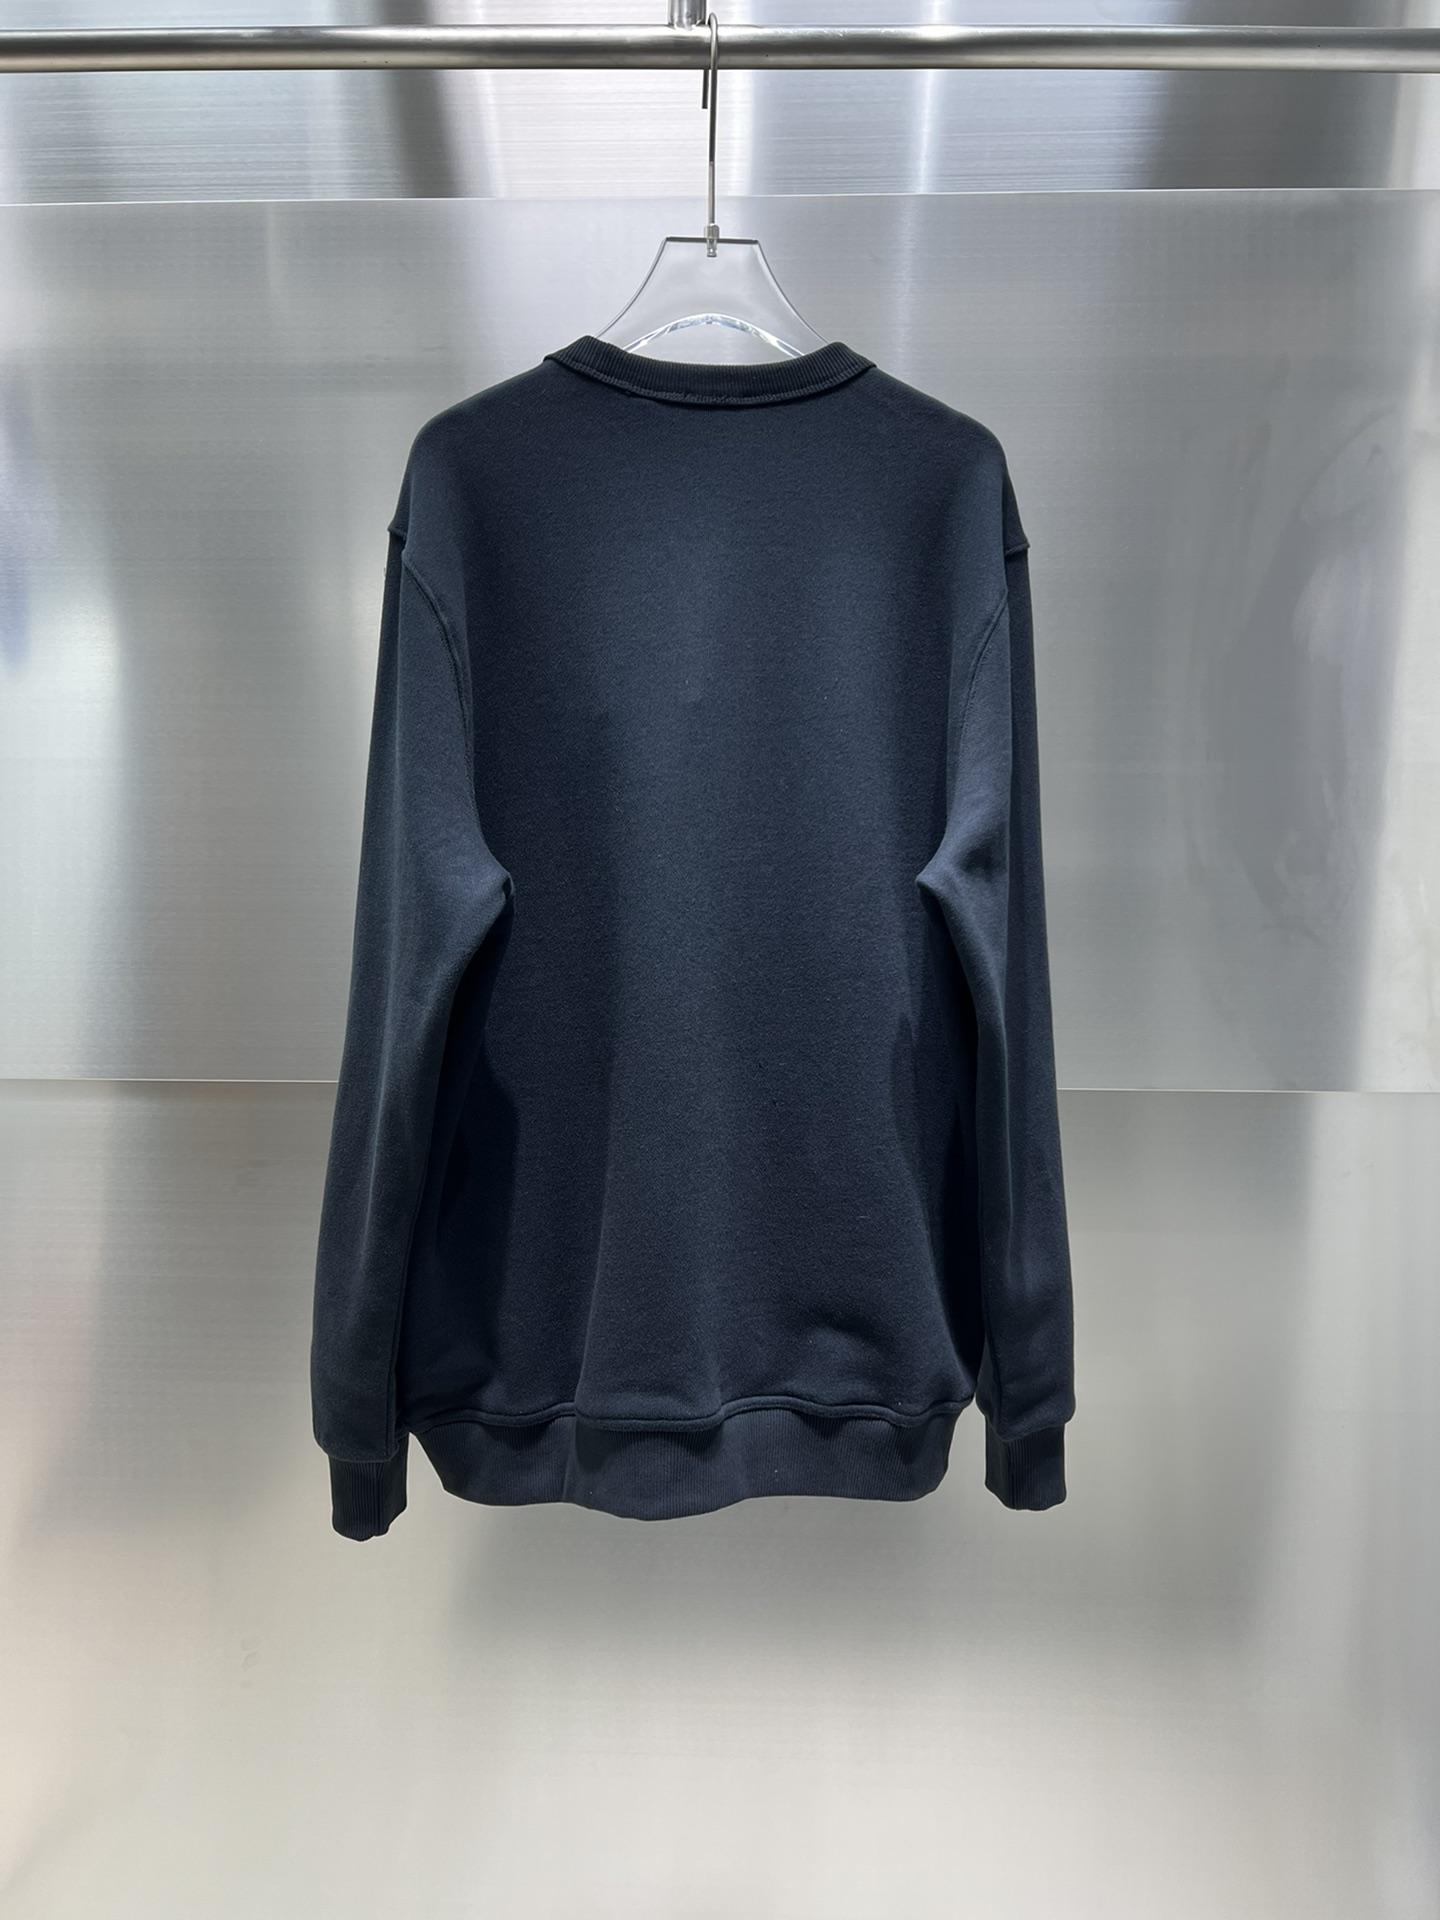 prorsum-label-cotton-sweatshirt-4817_16845004113-1000